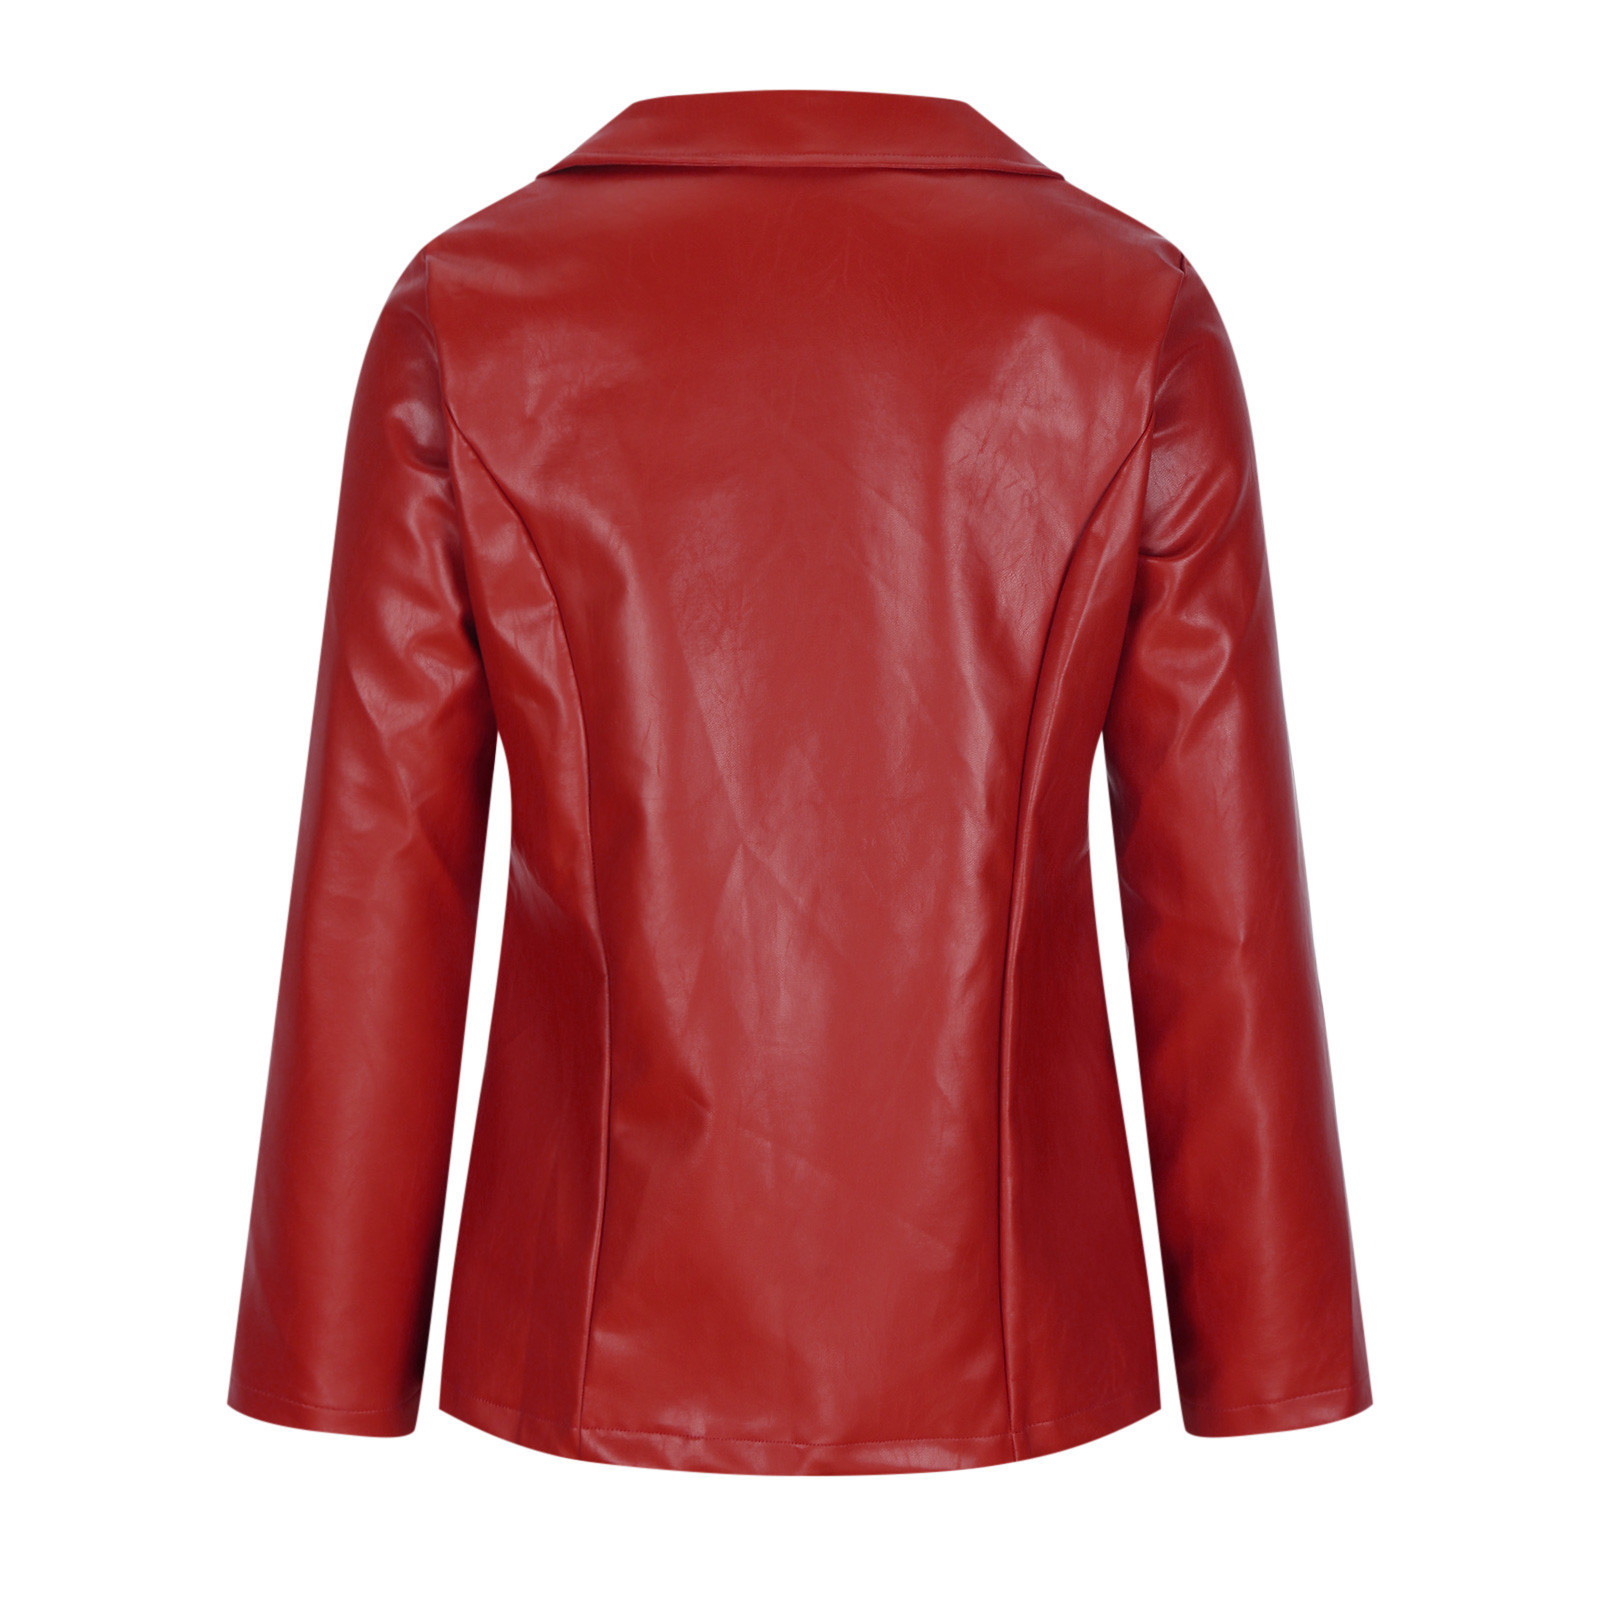 XIAOFFENN Women's Faux Leather Jackets, Lapel Collar Button Pocket Lightweight Motorcycle Jacket Leather Jacket Coat Pleather Outwear Red XL - image 5 of 7